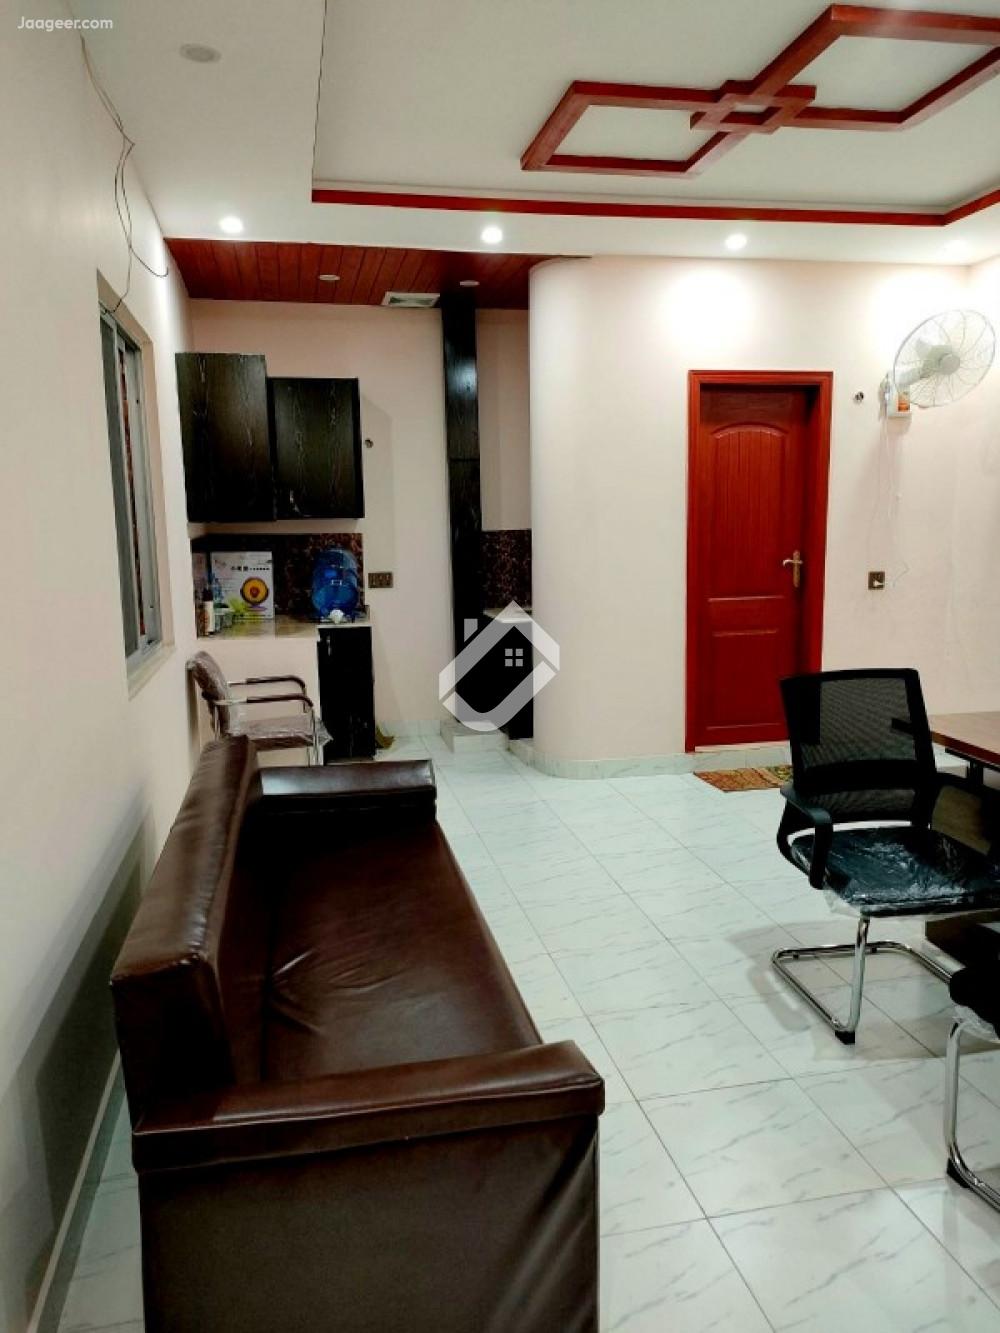 Main image 1 Bed Studio Apartment For Sale In Johar Town Main Boulevard, Maulana Shaukat Ali Road   5th Floor